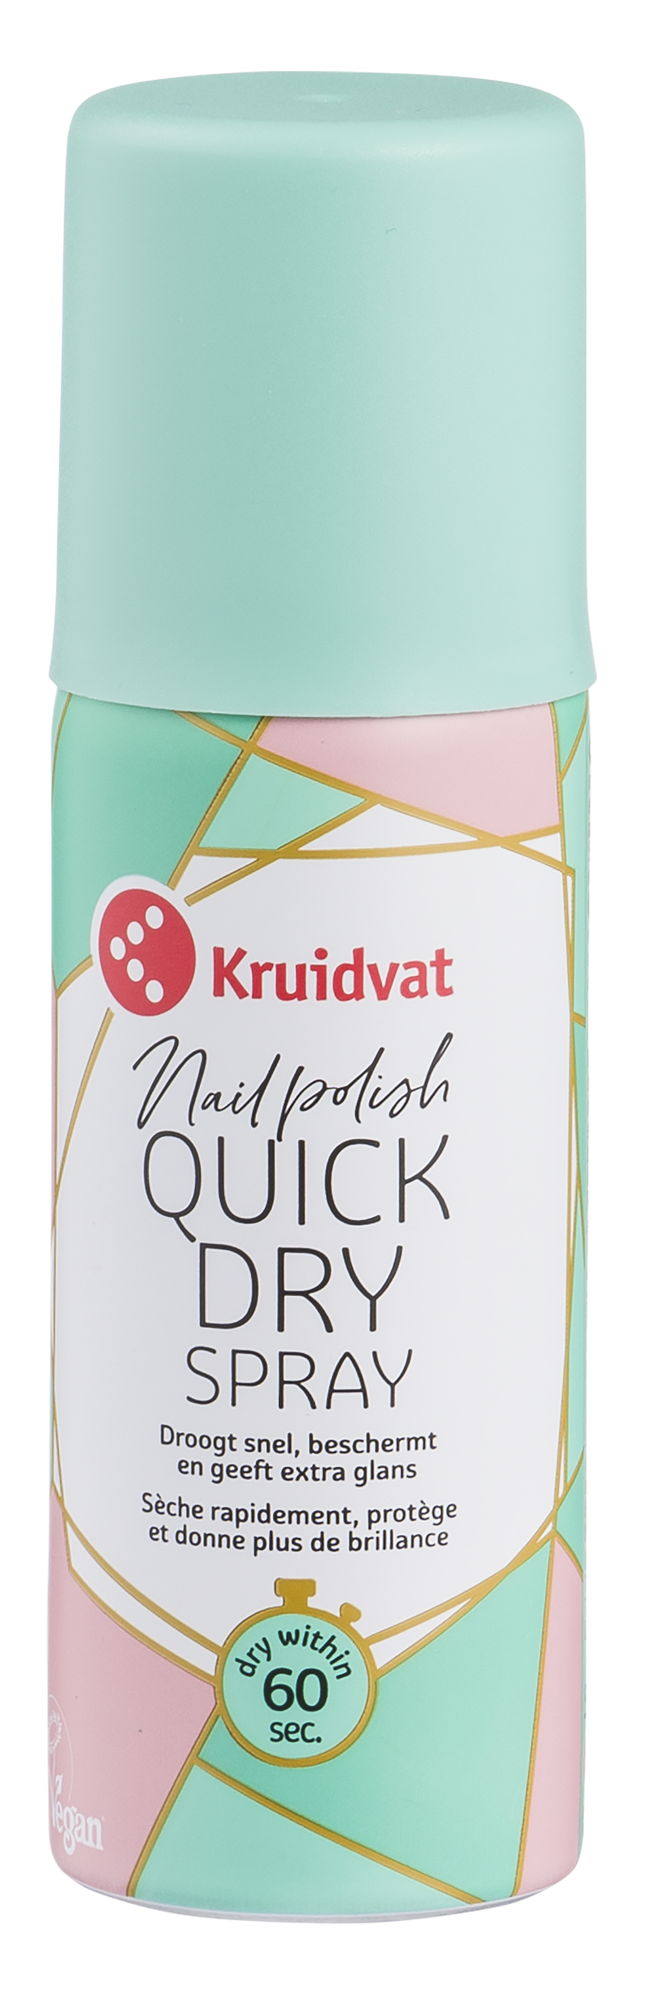 Kruidvat Nailpolish Quick Dry Spray